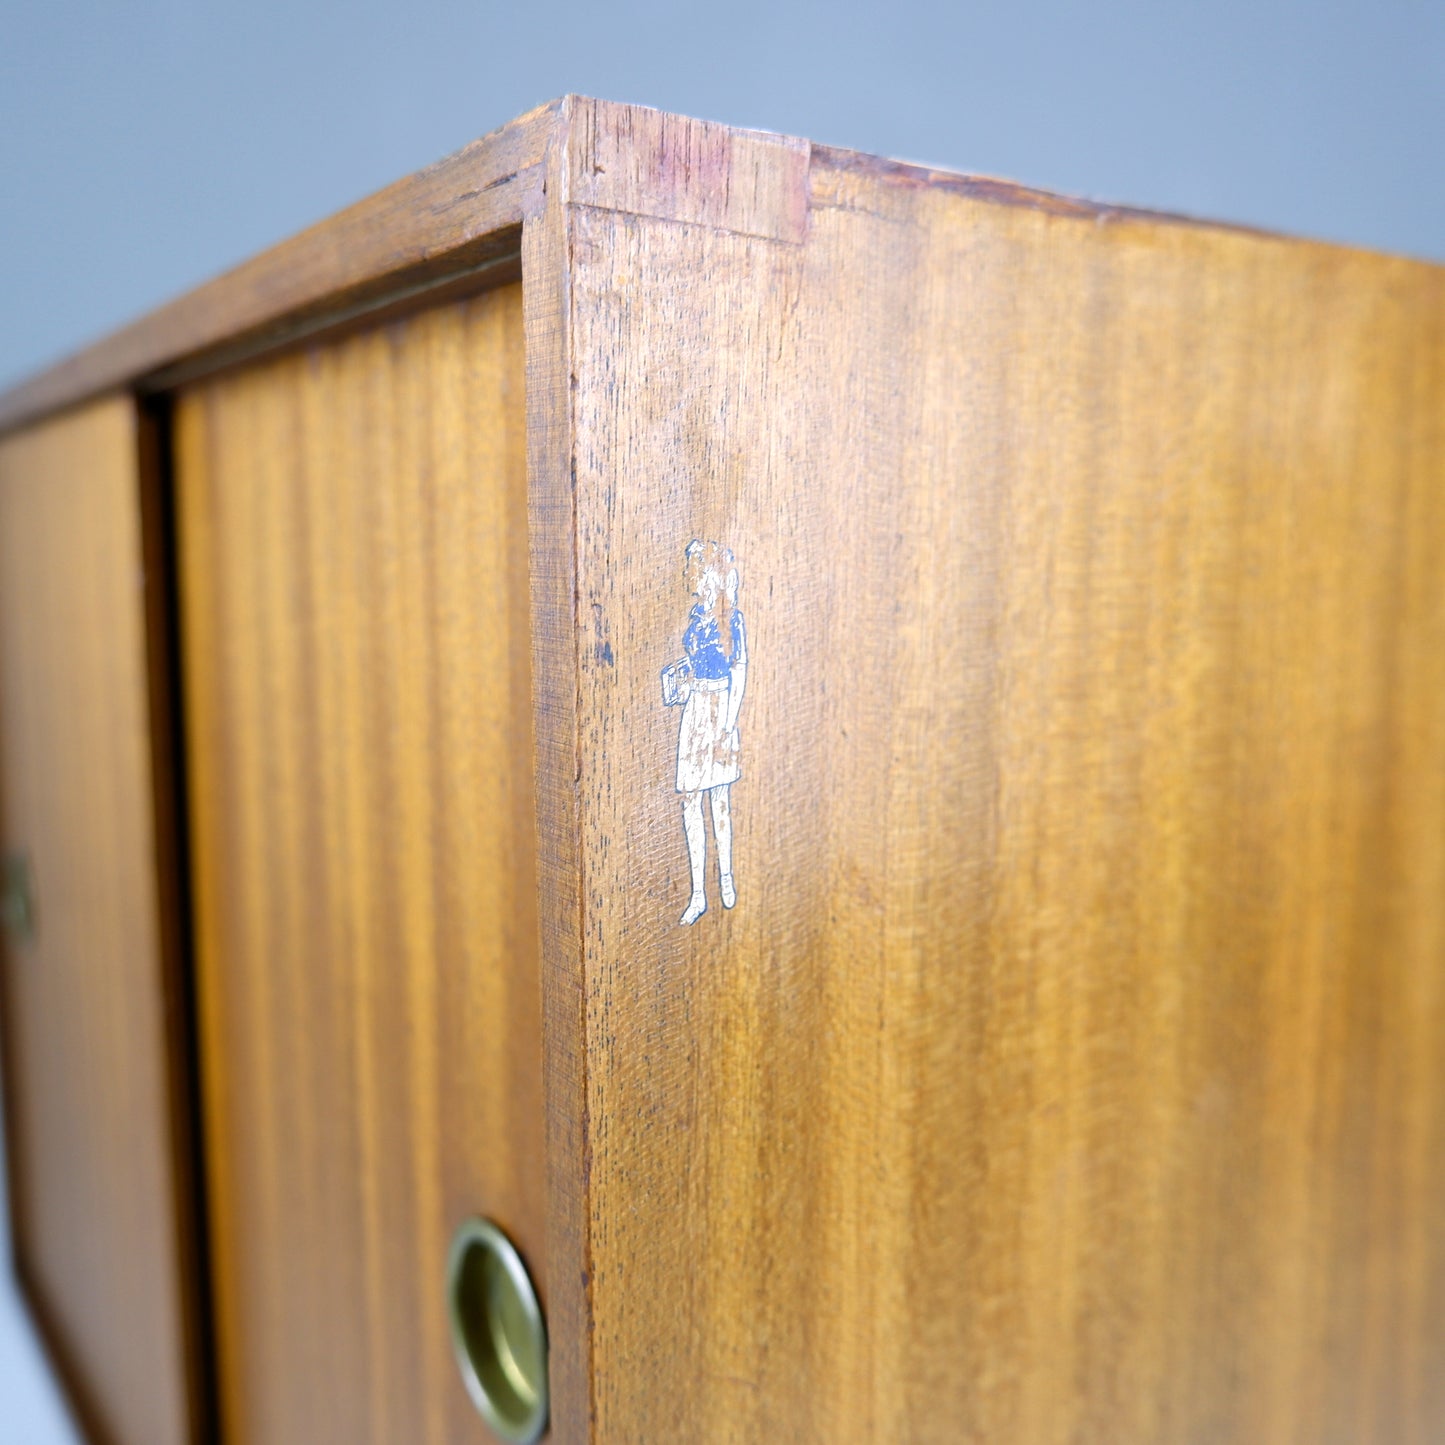 Mid Century Teak Record Cabinet / Vinyl Storage / HiFi Record Player Stand